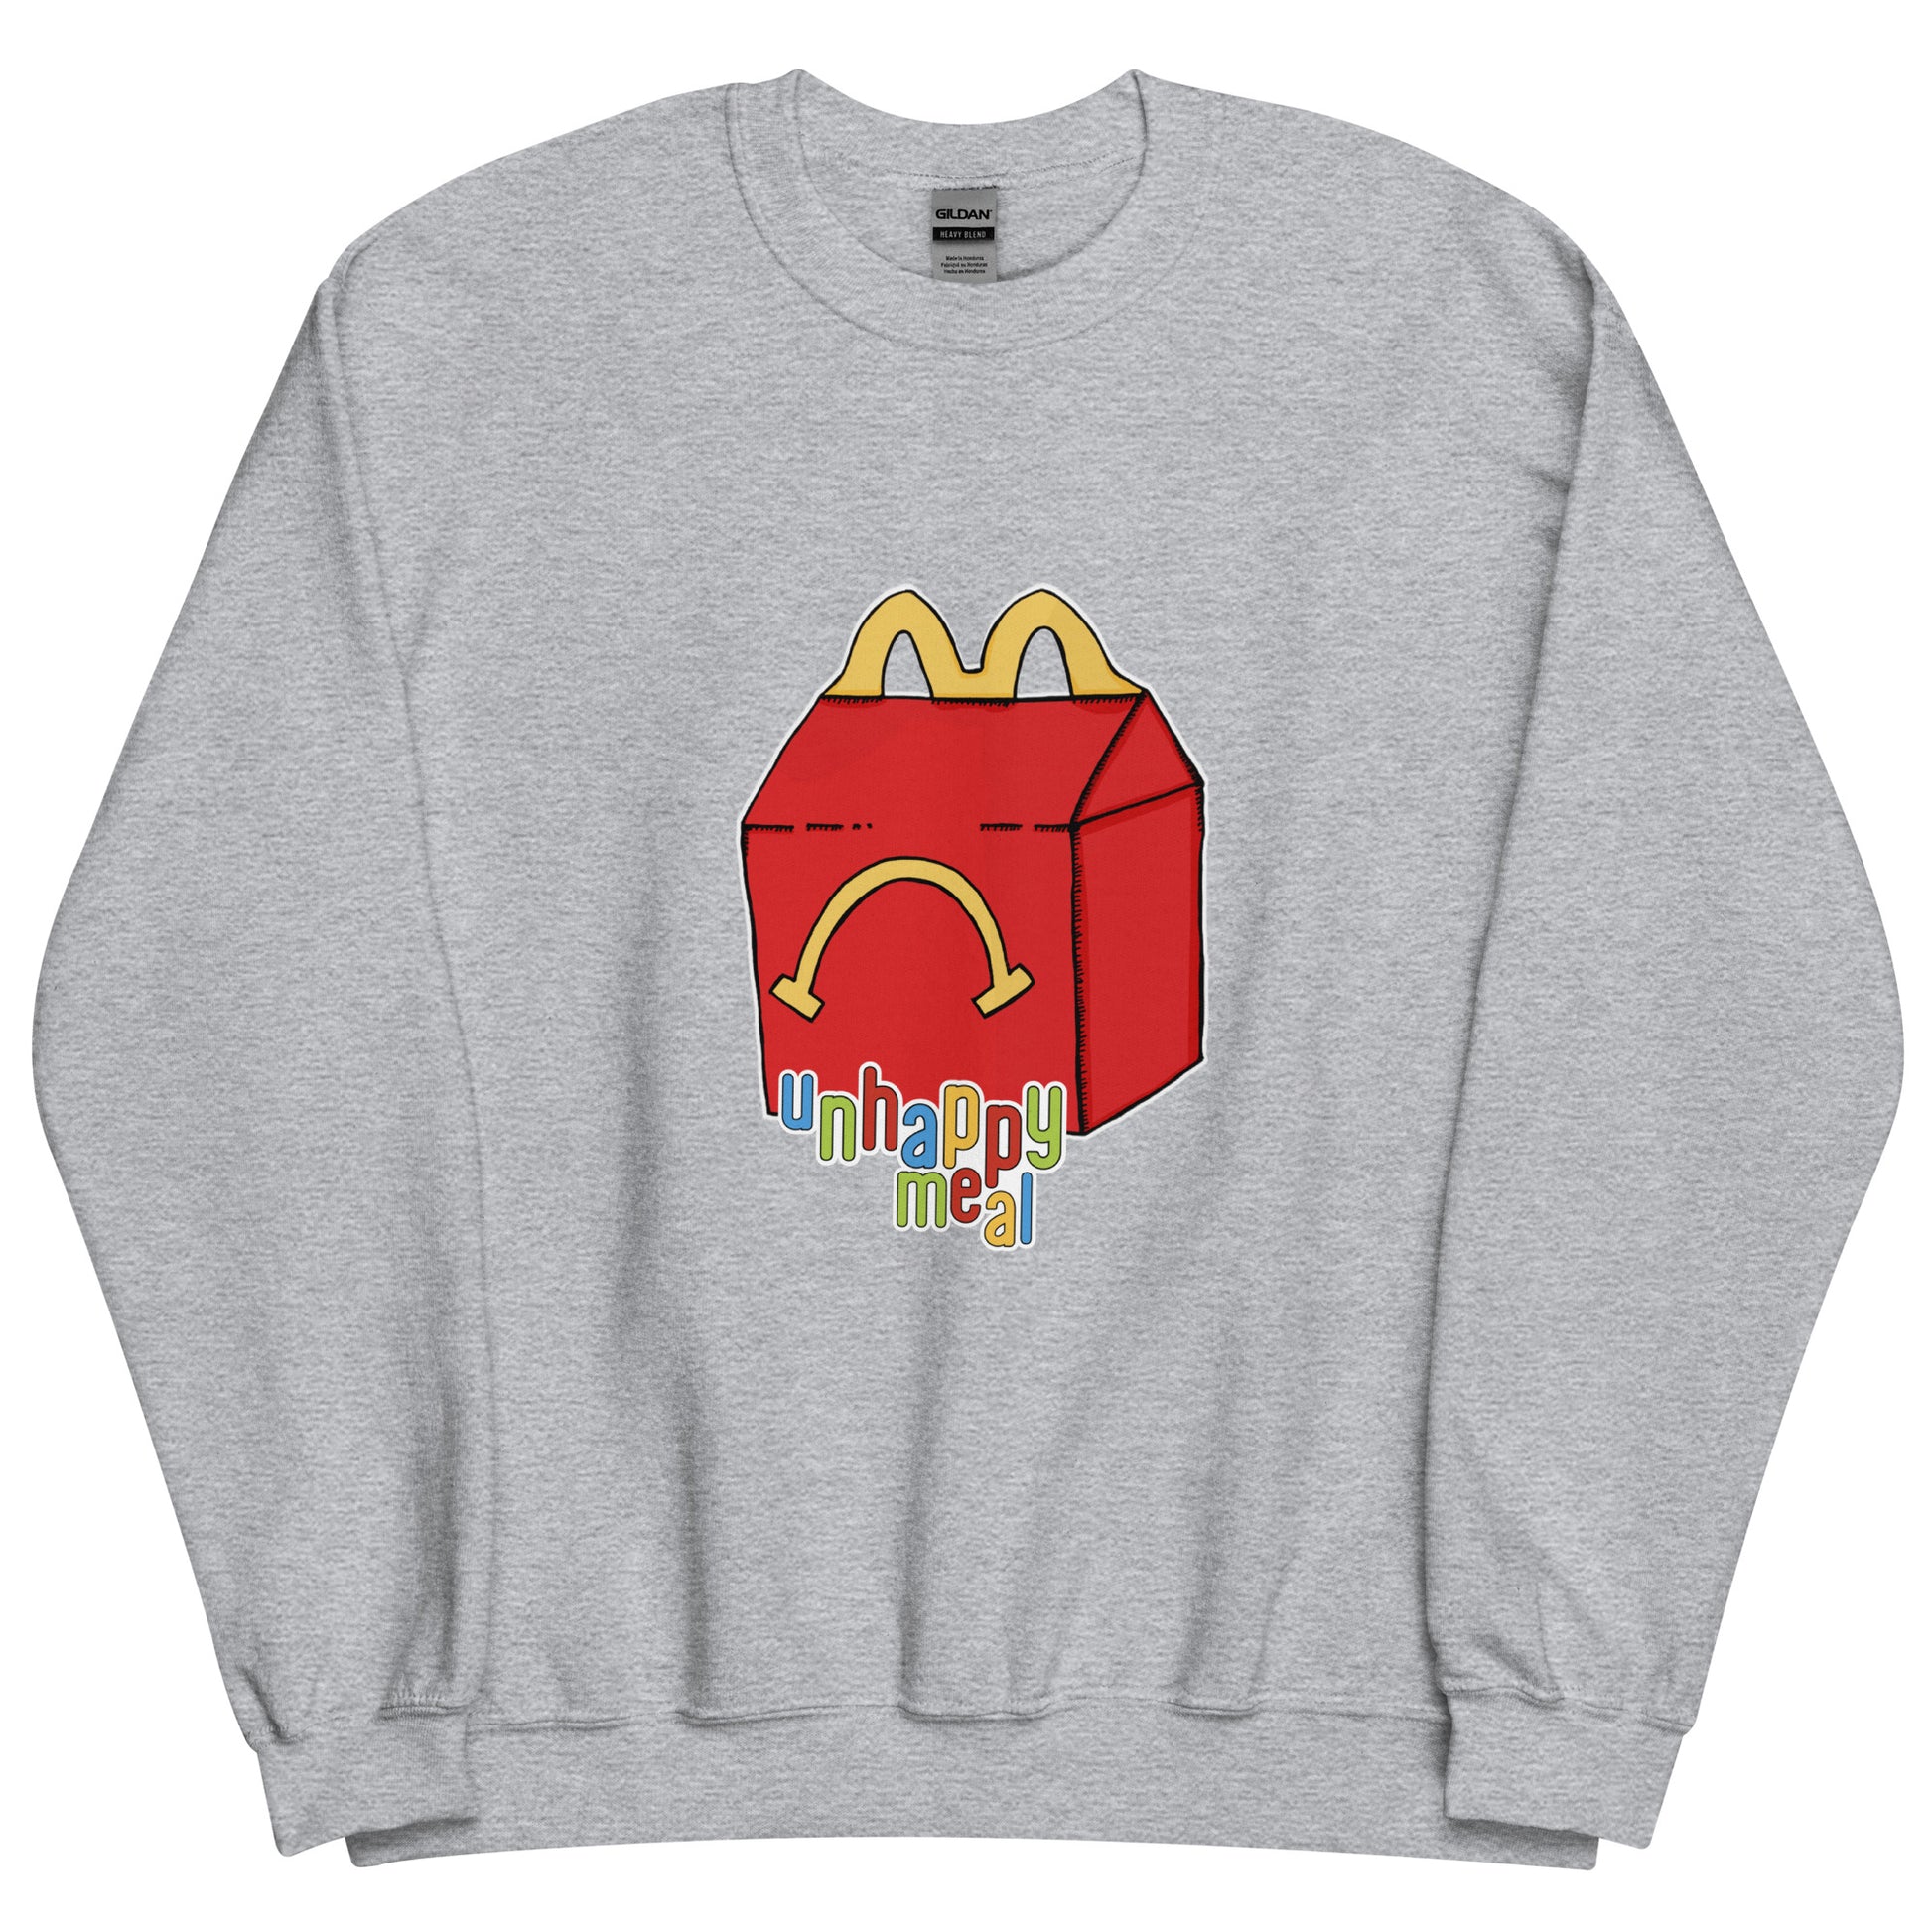 unhappy meal sweatshirt in light grey - gaslit apparel